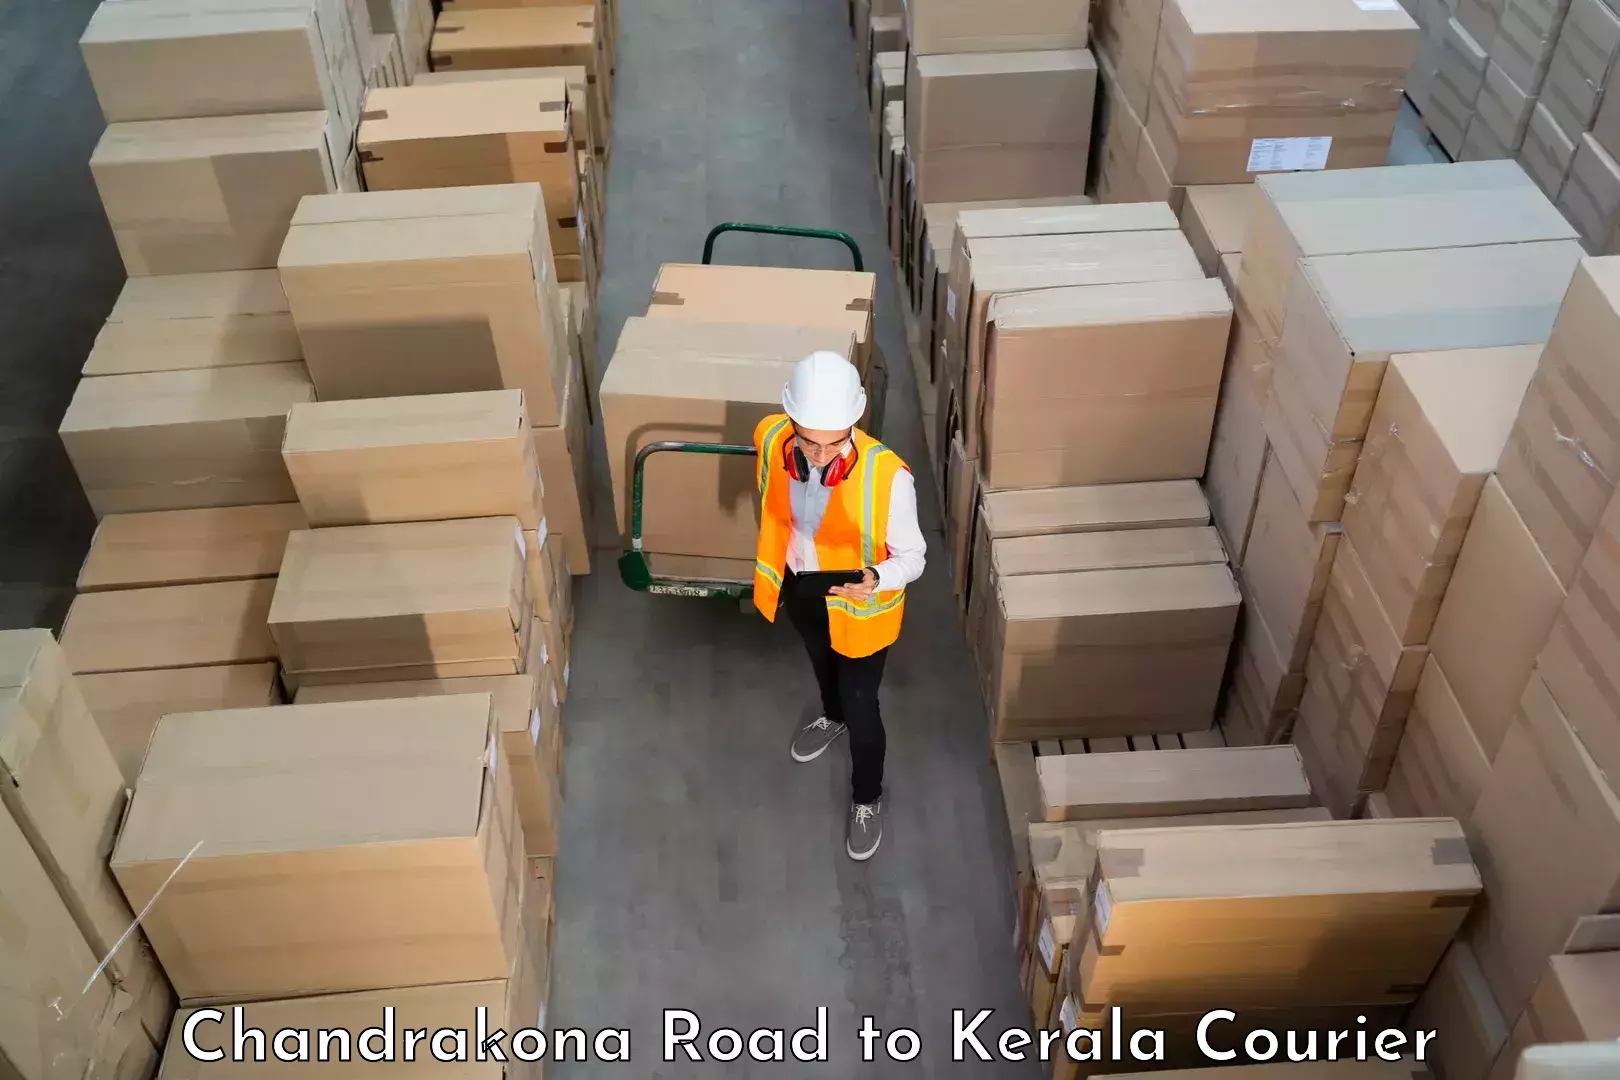 Skilled furniture transporters Chandrakona Road to Perambra